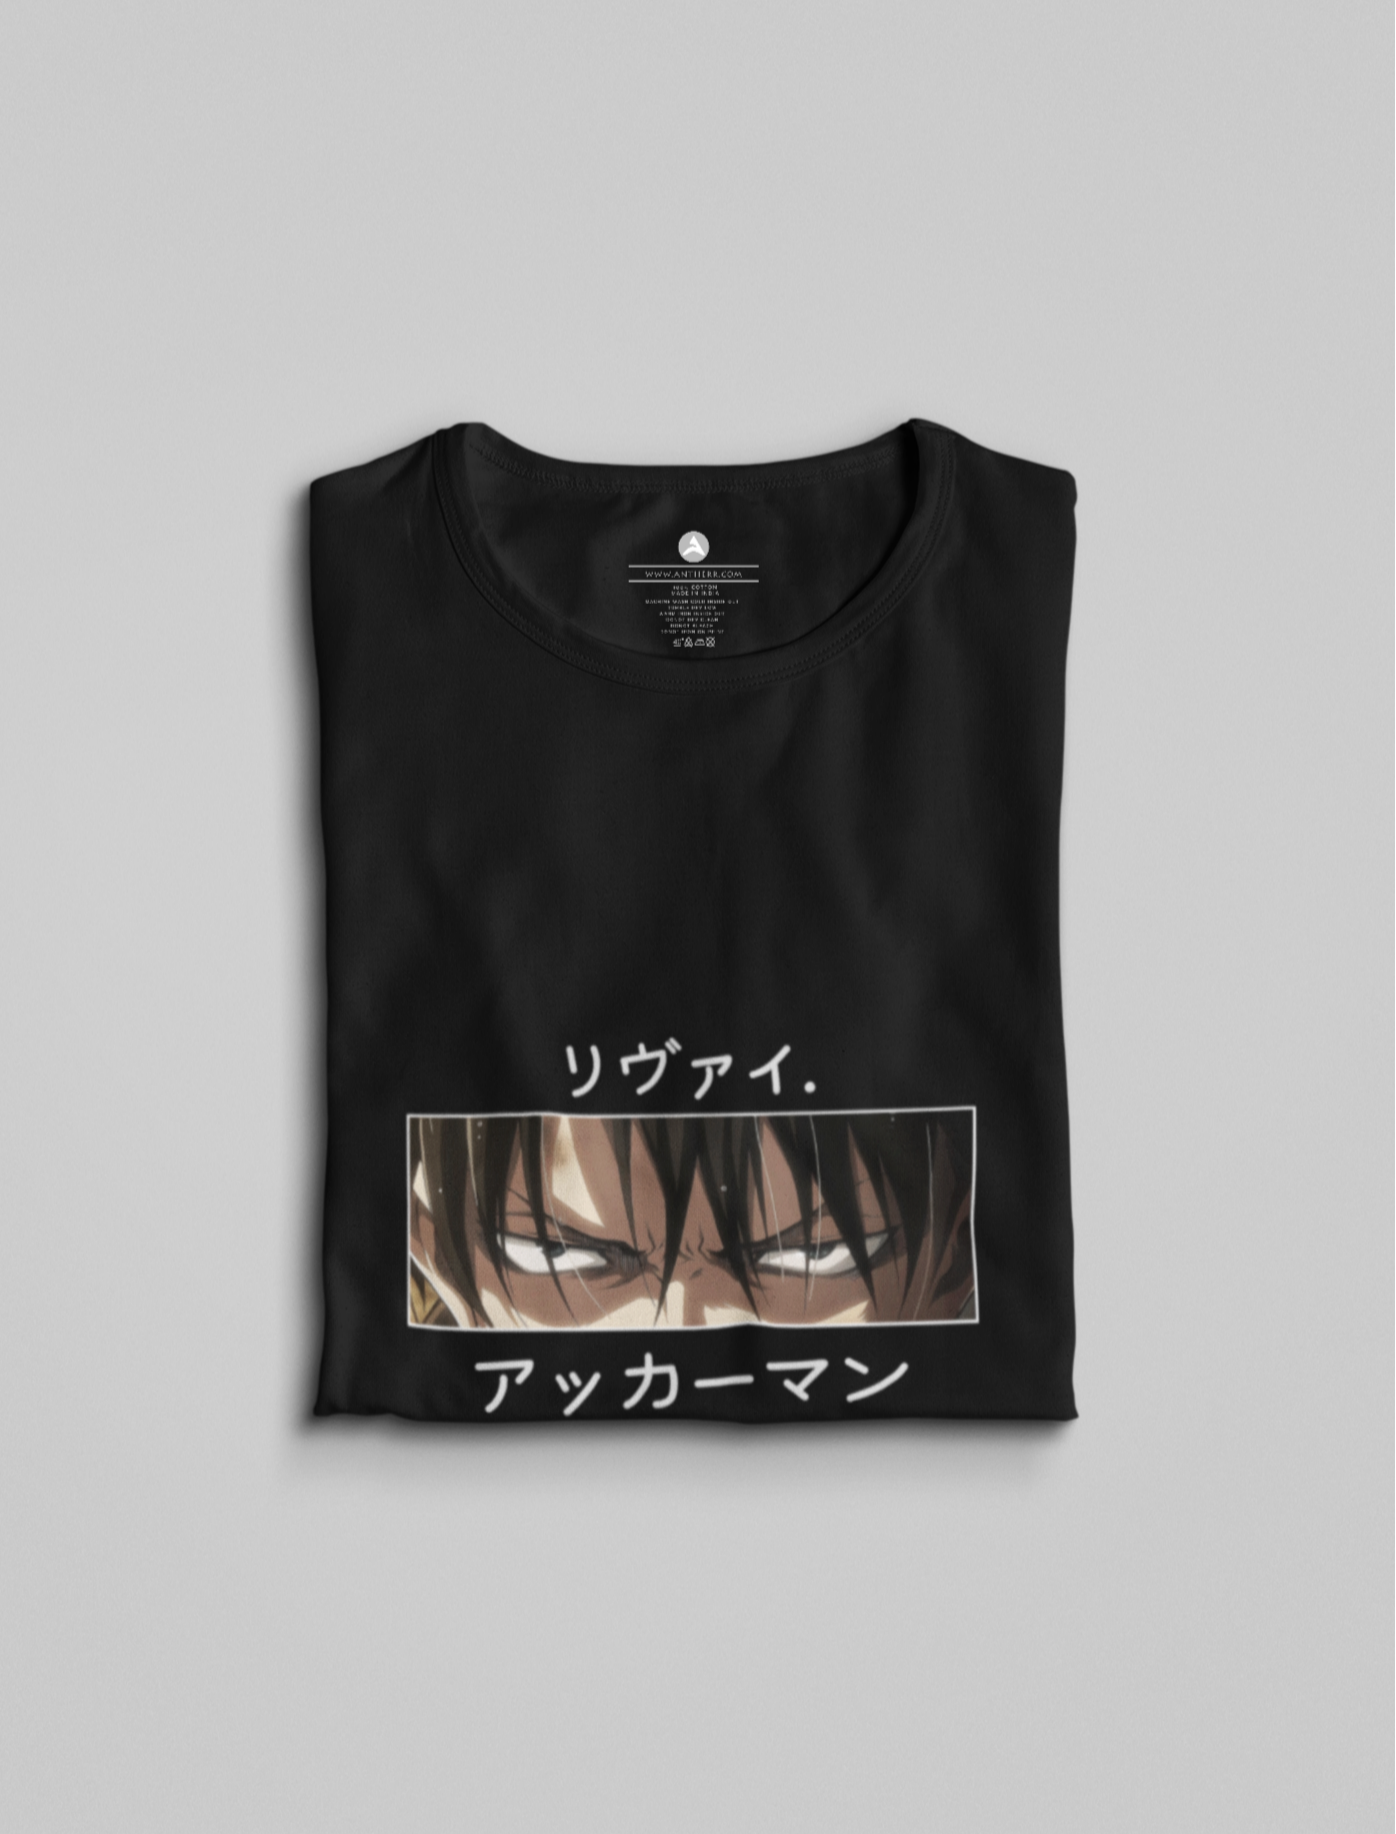 Levi Ackerman's Eyes- Attack on Titan: Anime- Oversized T-Shirts